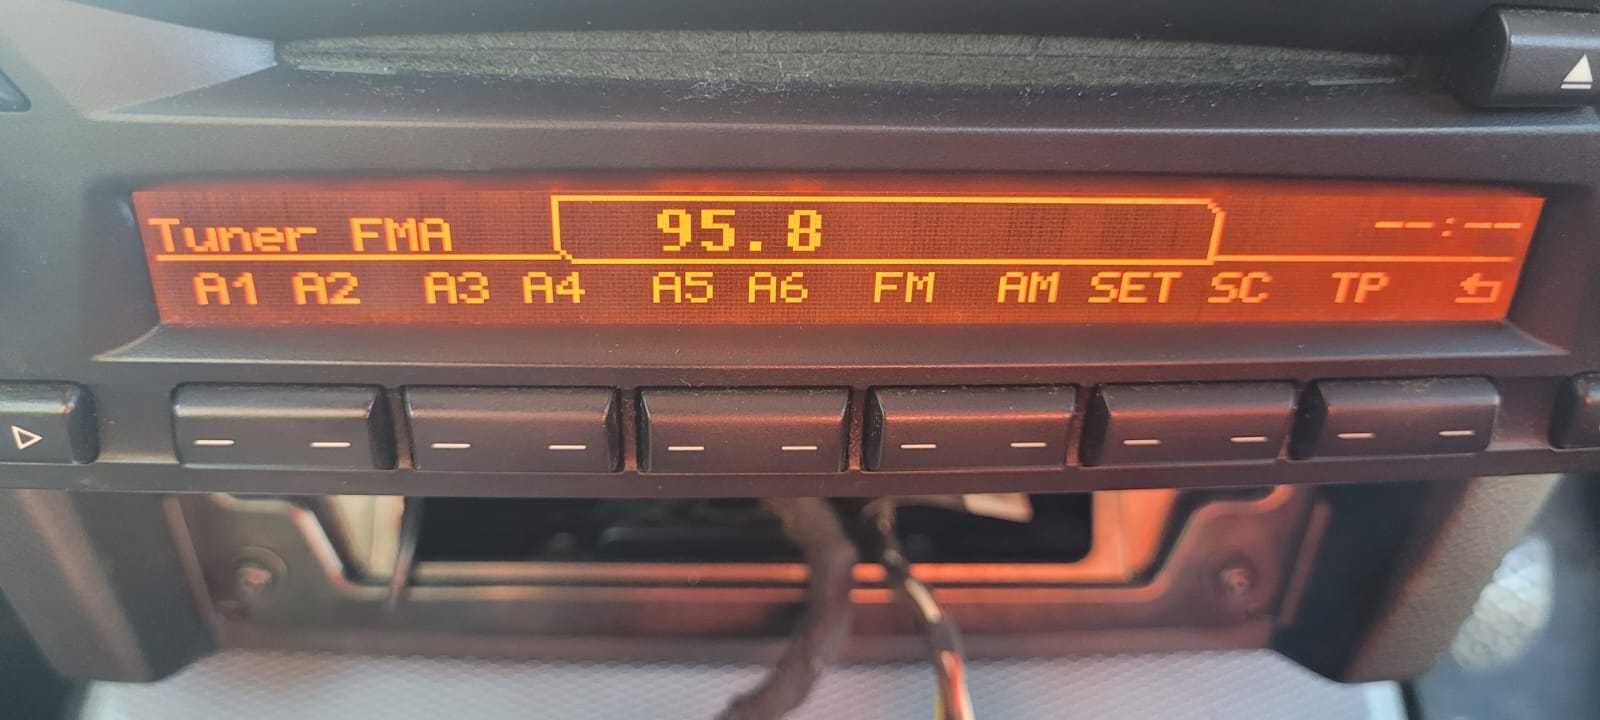 Radio profesjonal BMW X1 1 3 E84 E78 E90 bluetooth faktura vat